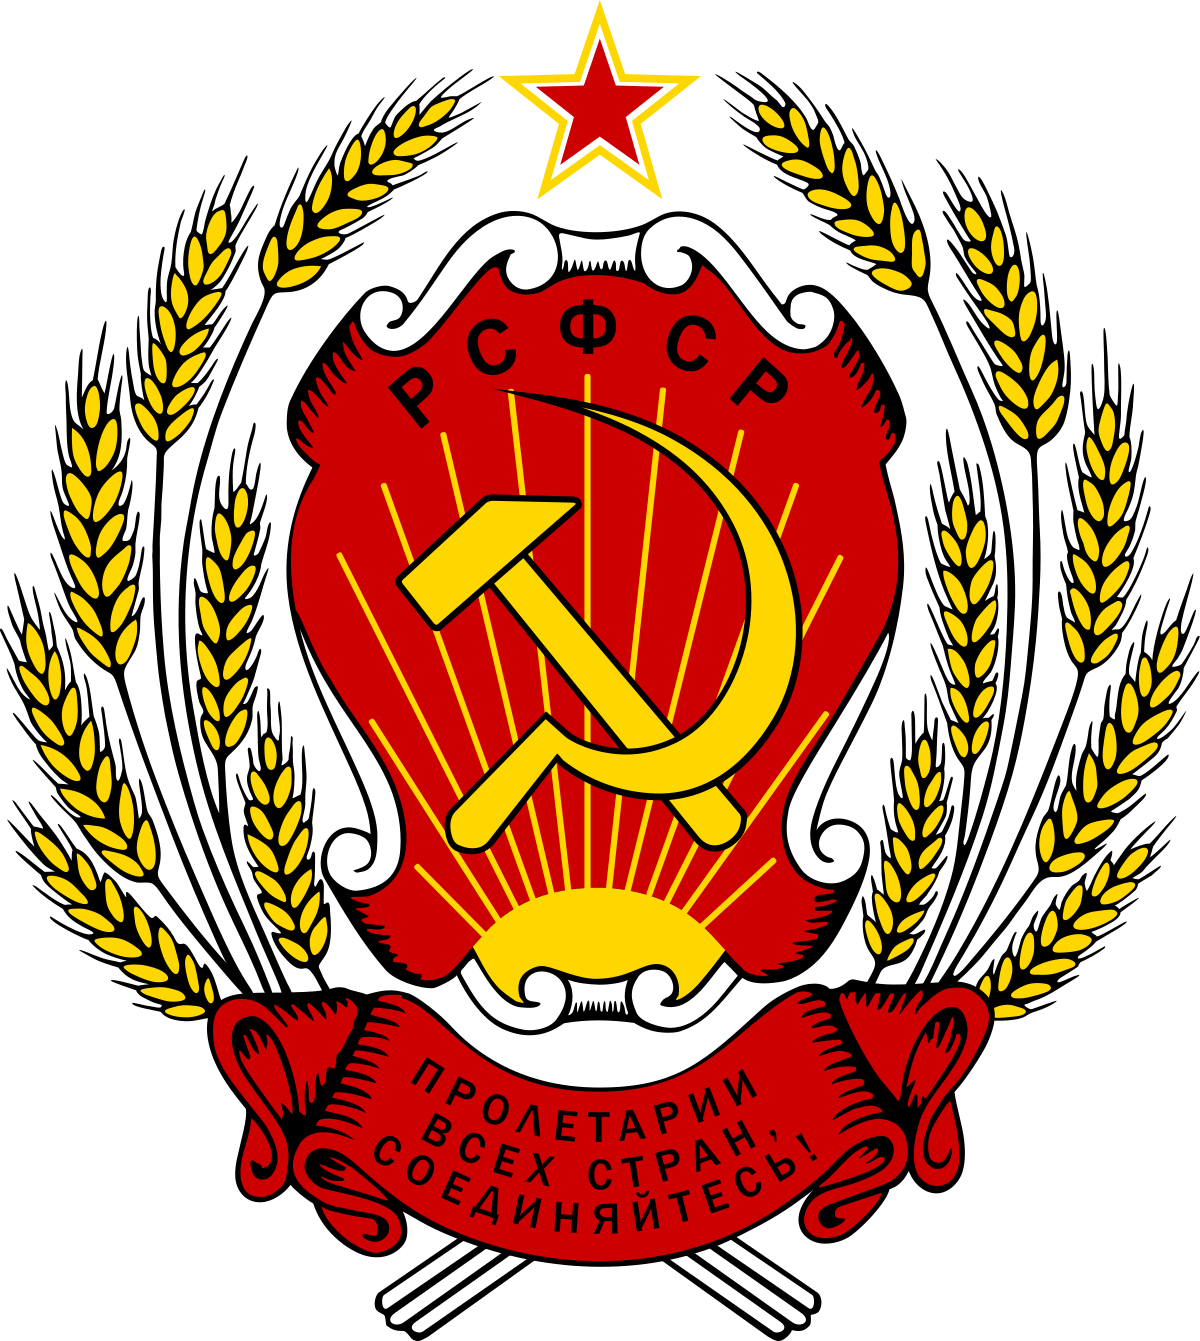 Socialist Logo - Emblem of the Russian Soviet Federative Socialist Republic